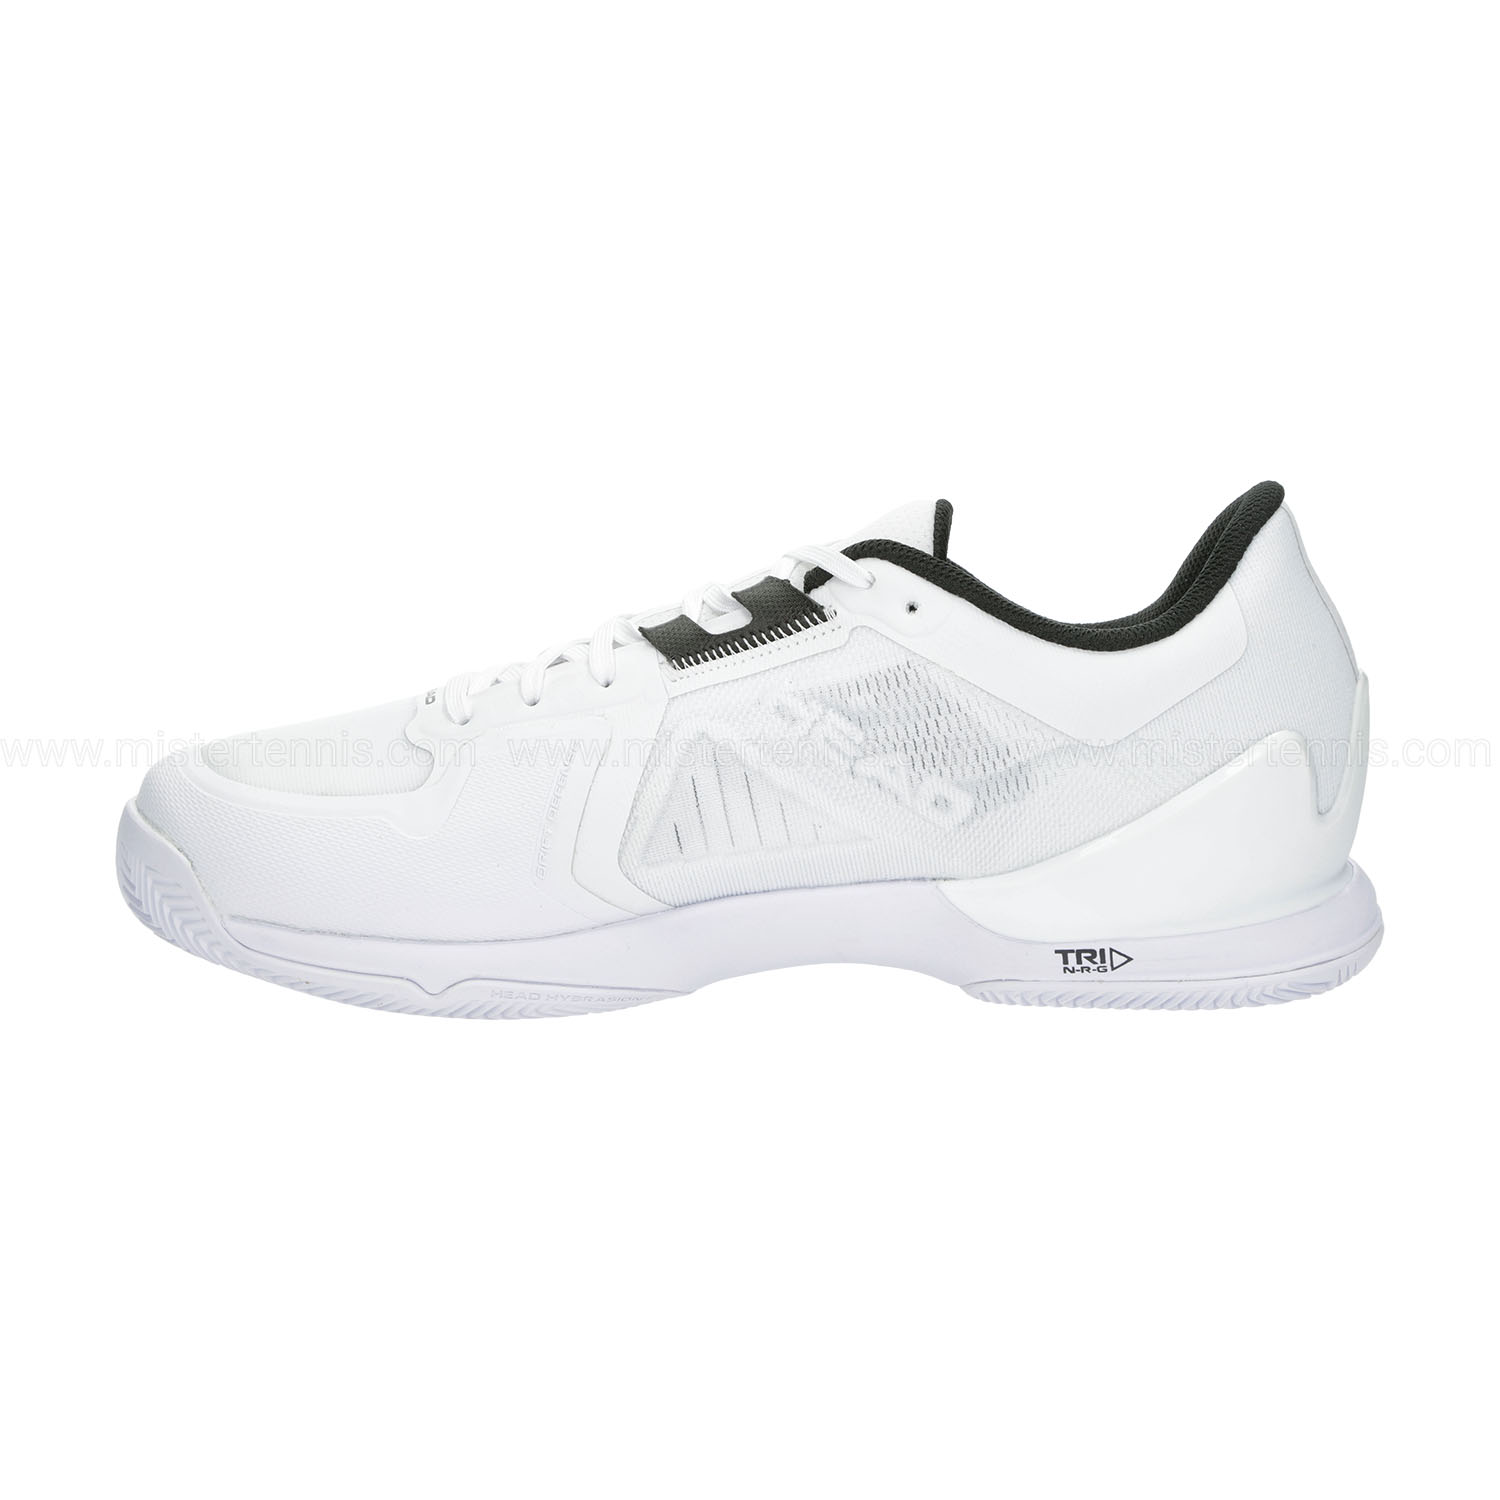 Head Sprint Pro 3.5 Clay Men's Tennis Shoes - White/Black